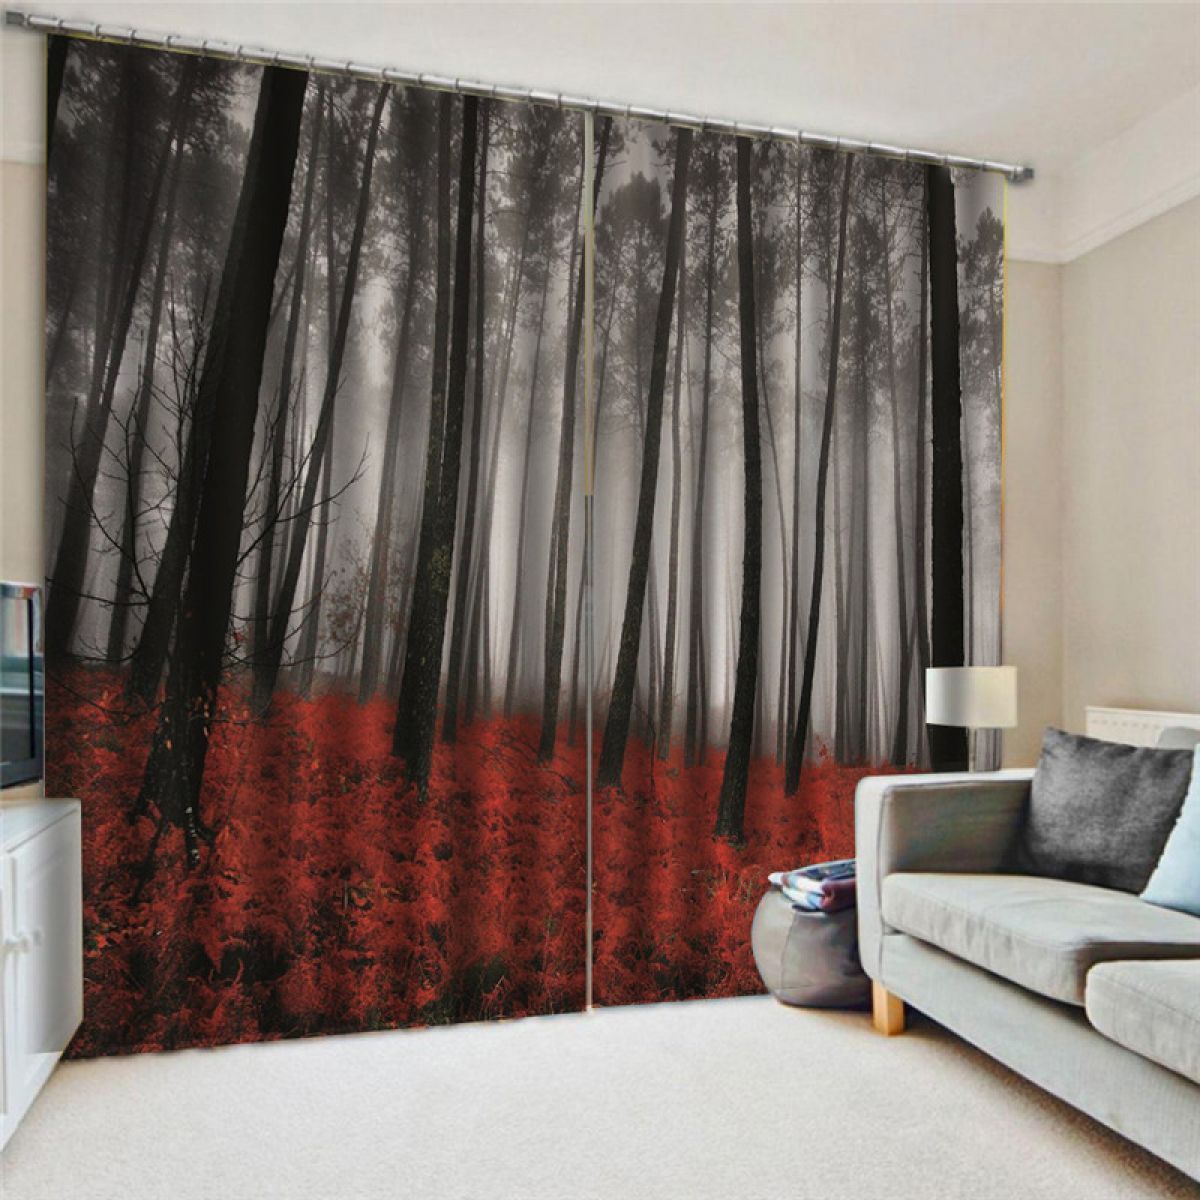 foggy forest printed window curtain home decor 5300